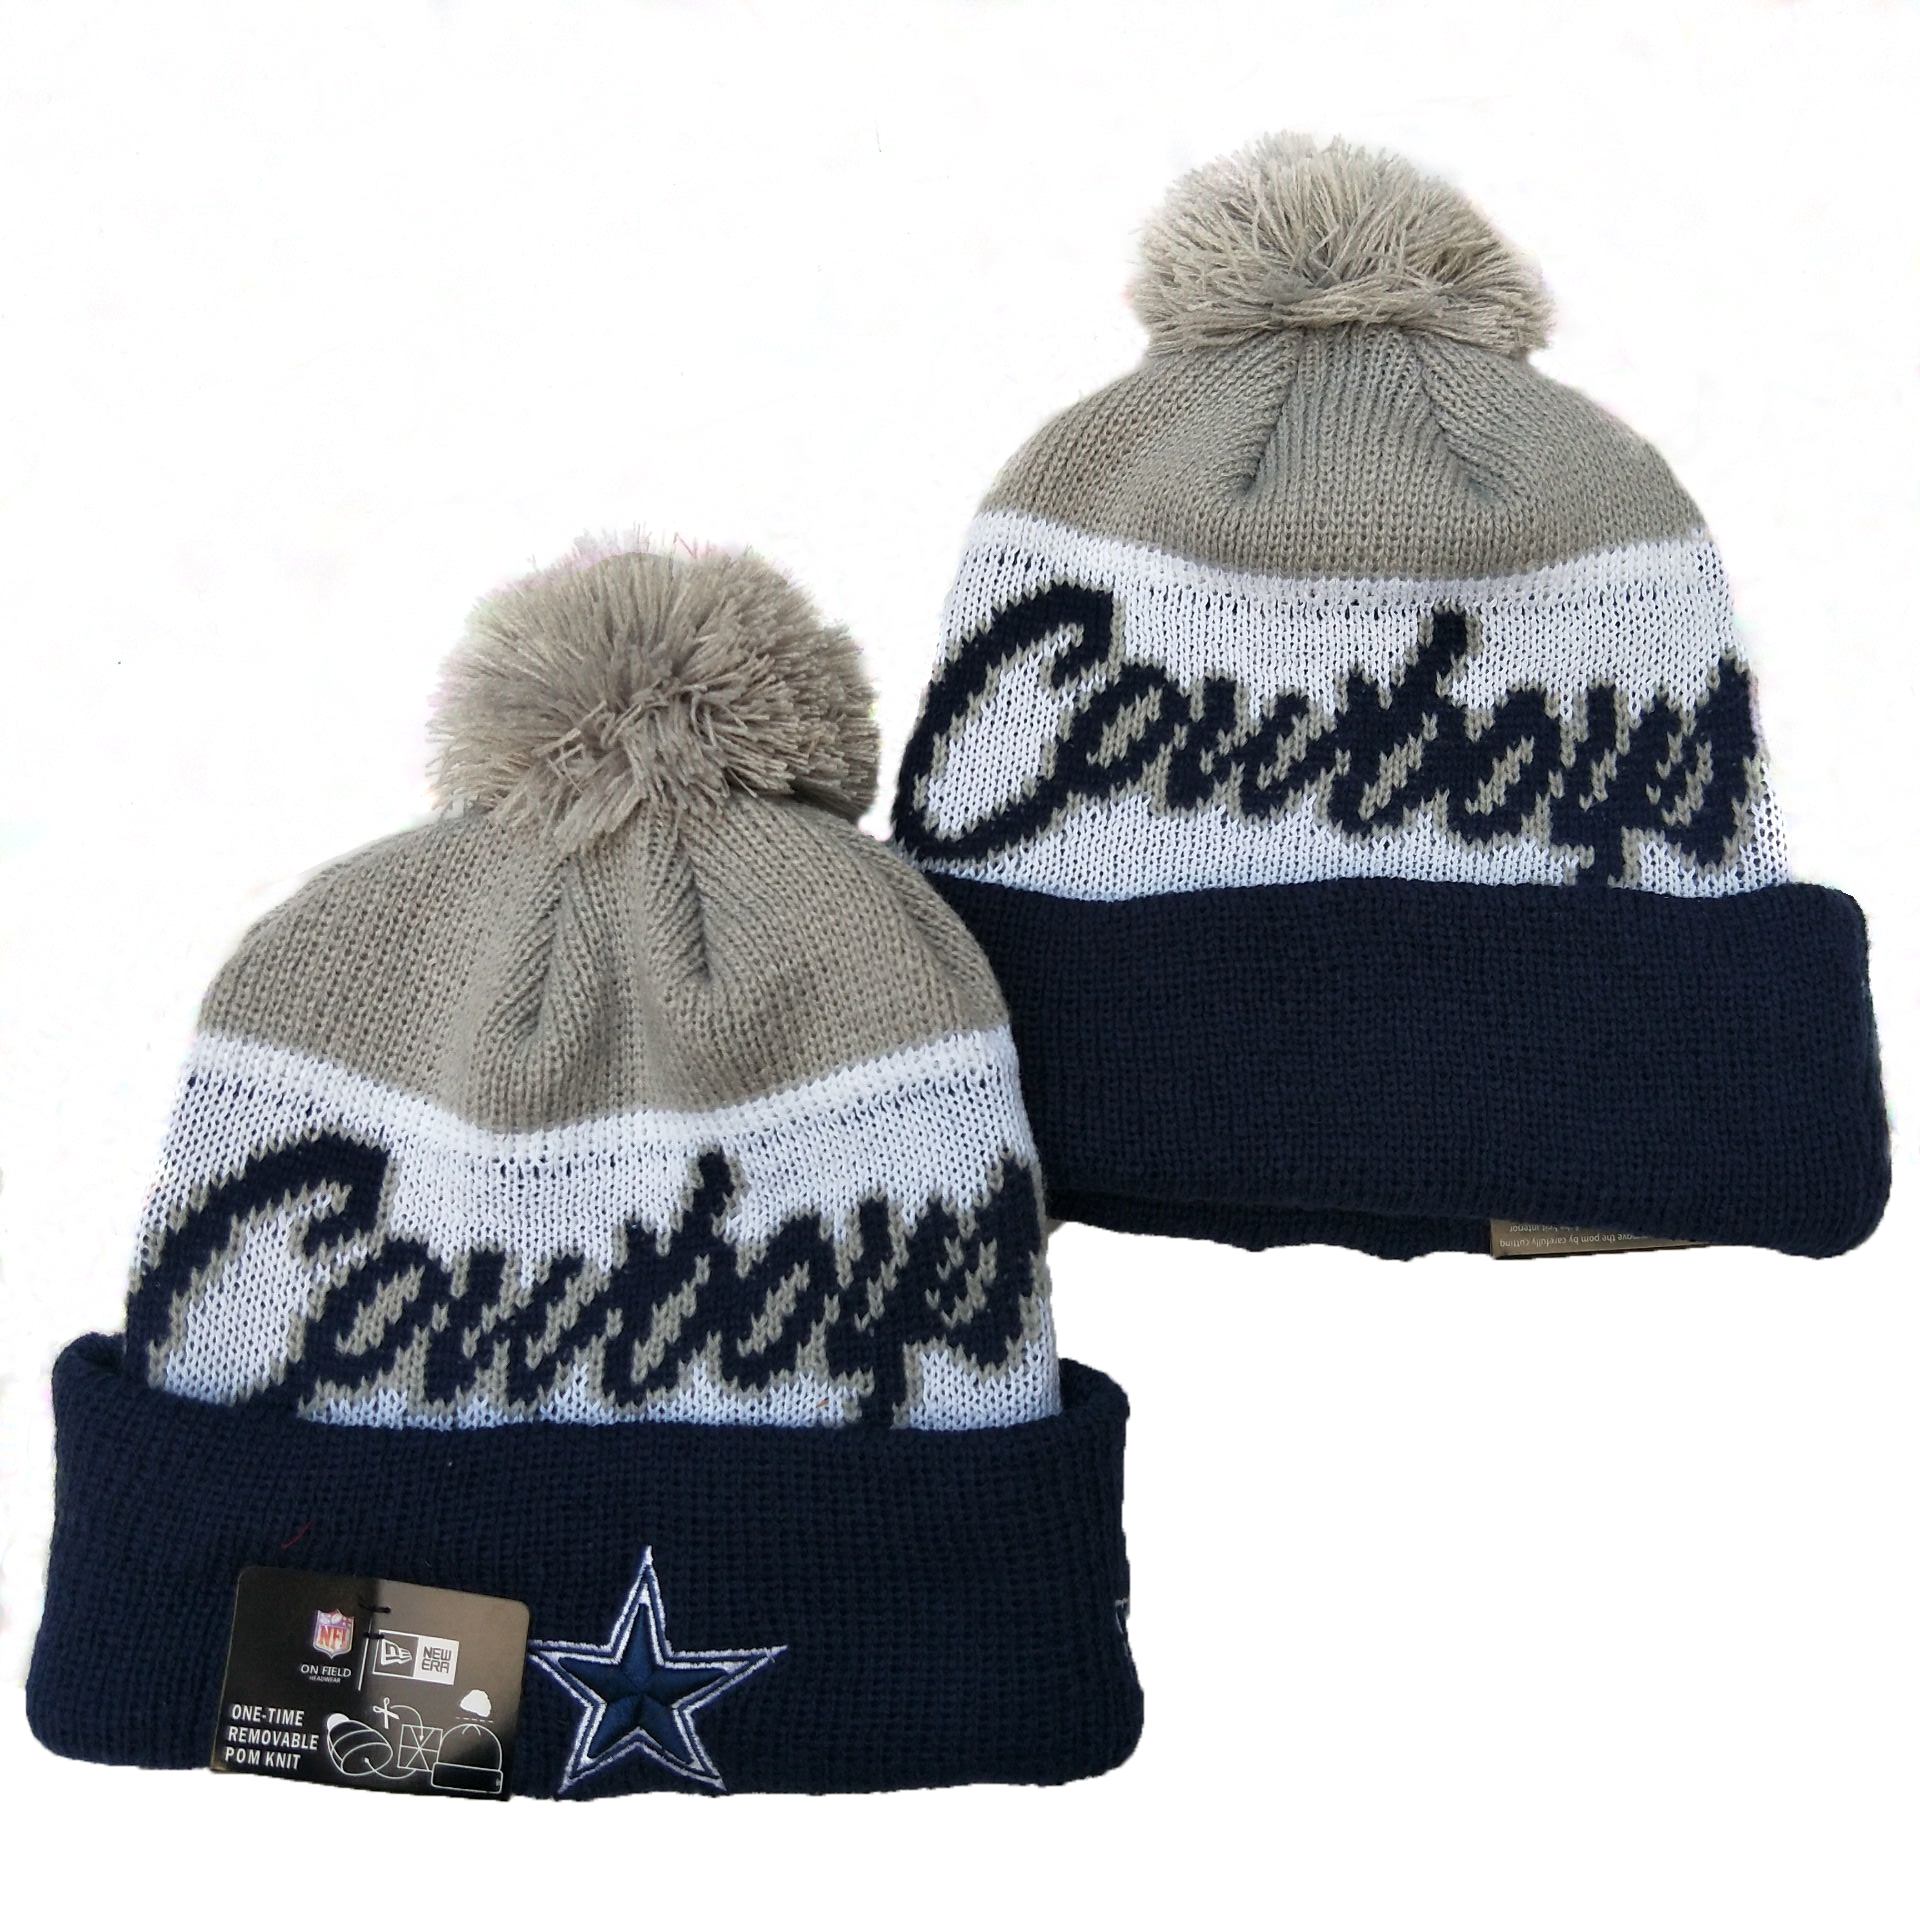 Dallas Cowboys Knit Hats 053